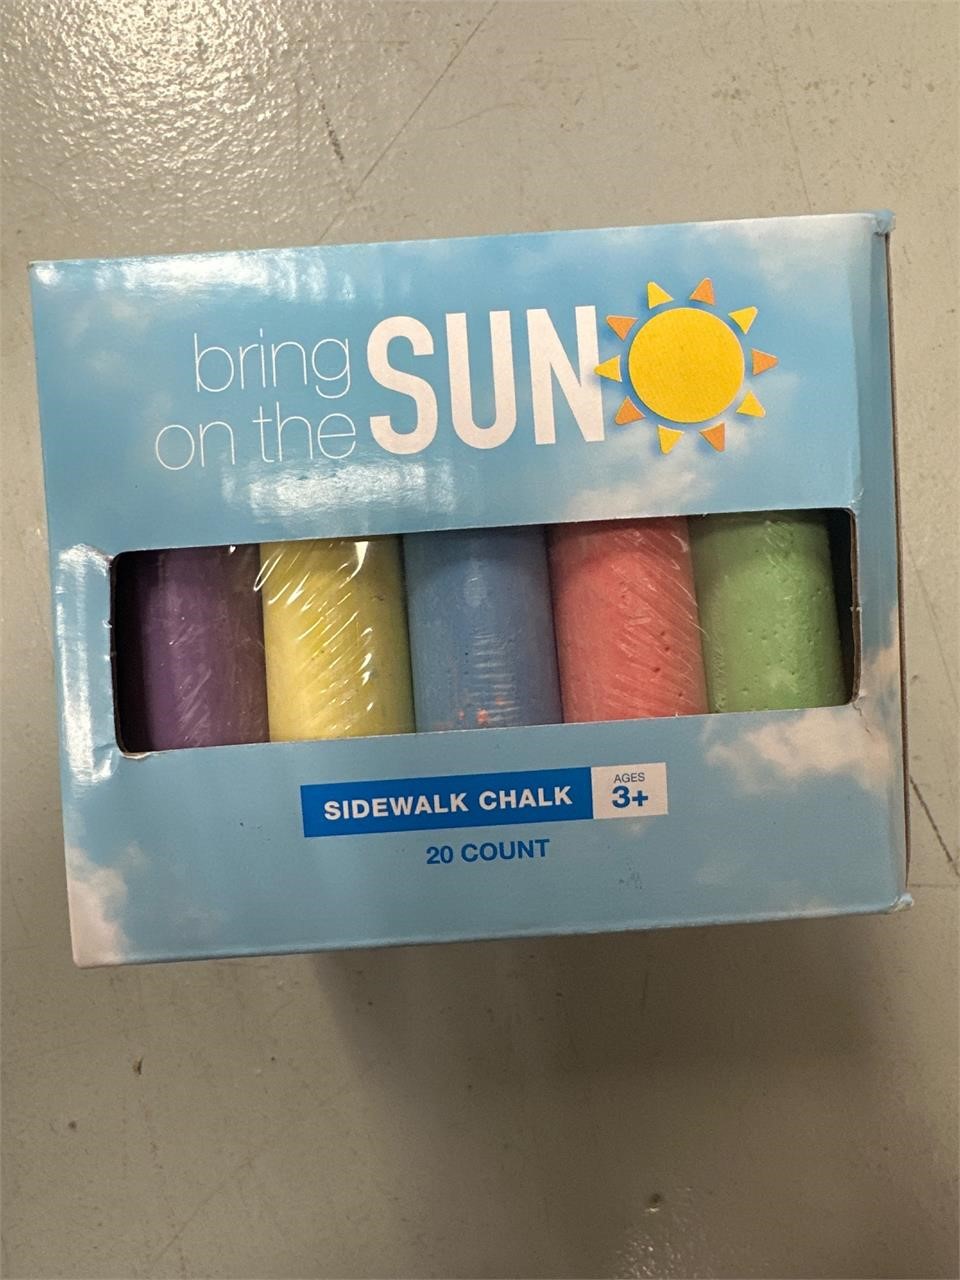 Brig on the sun